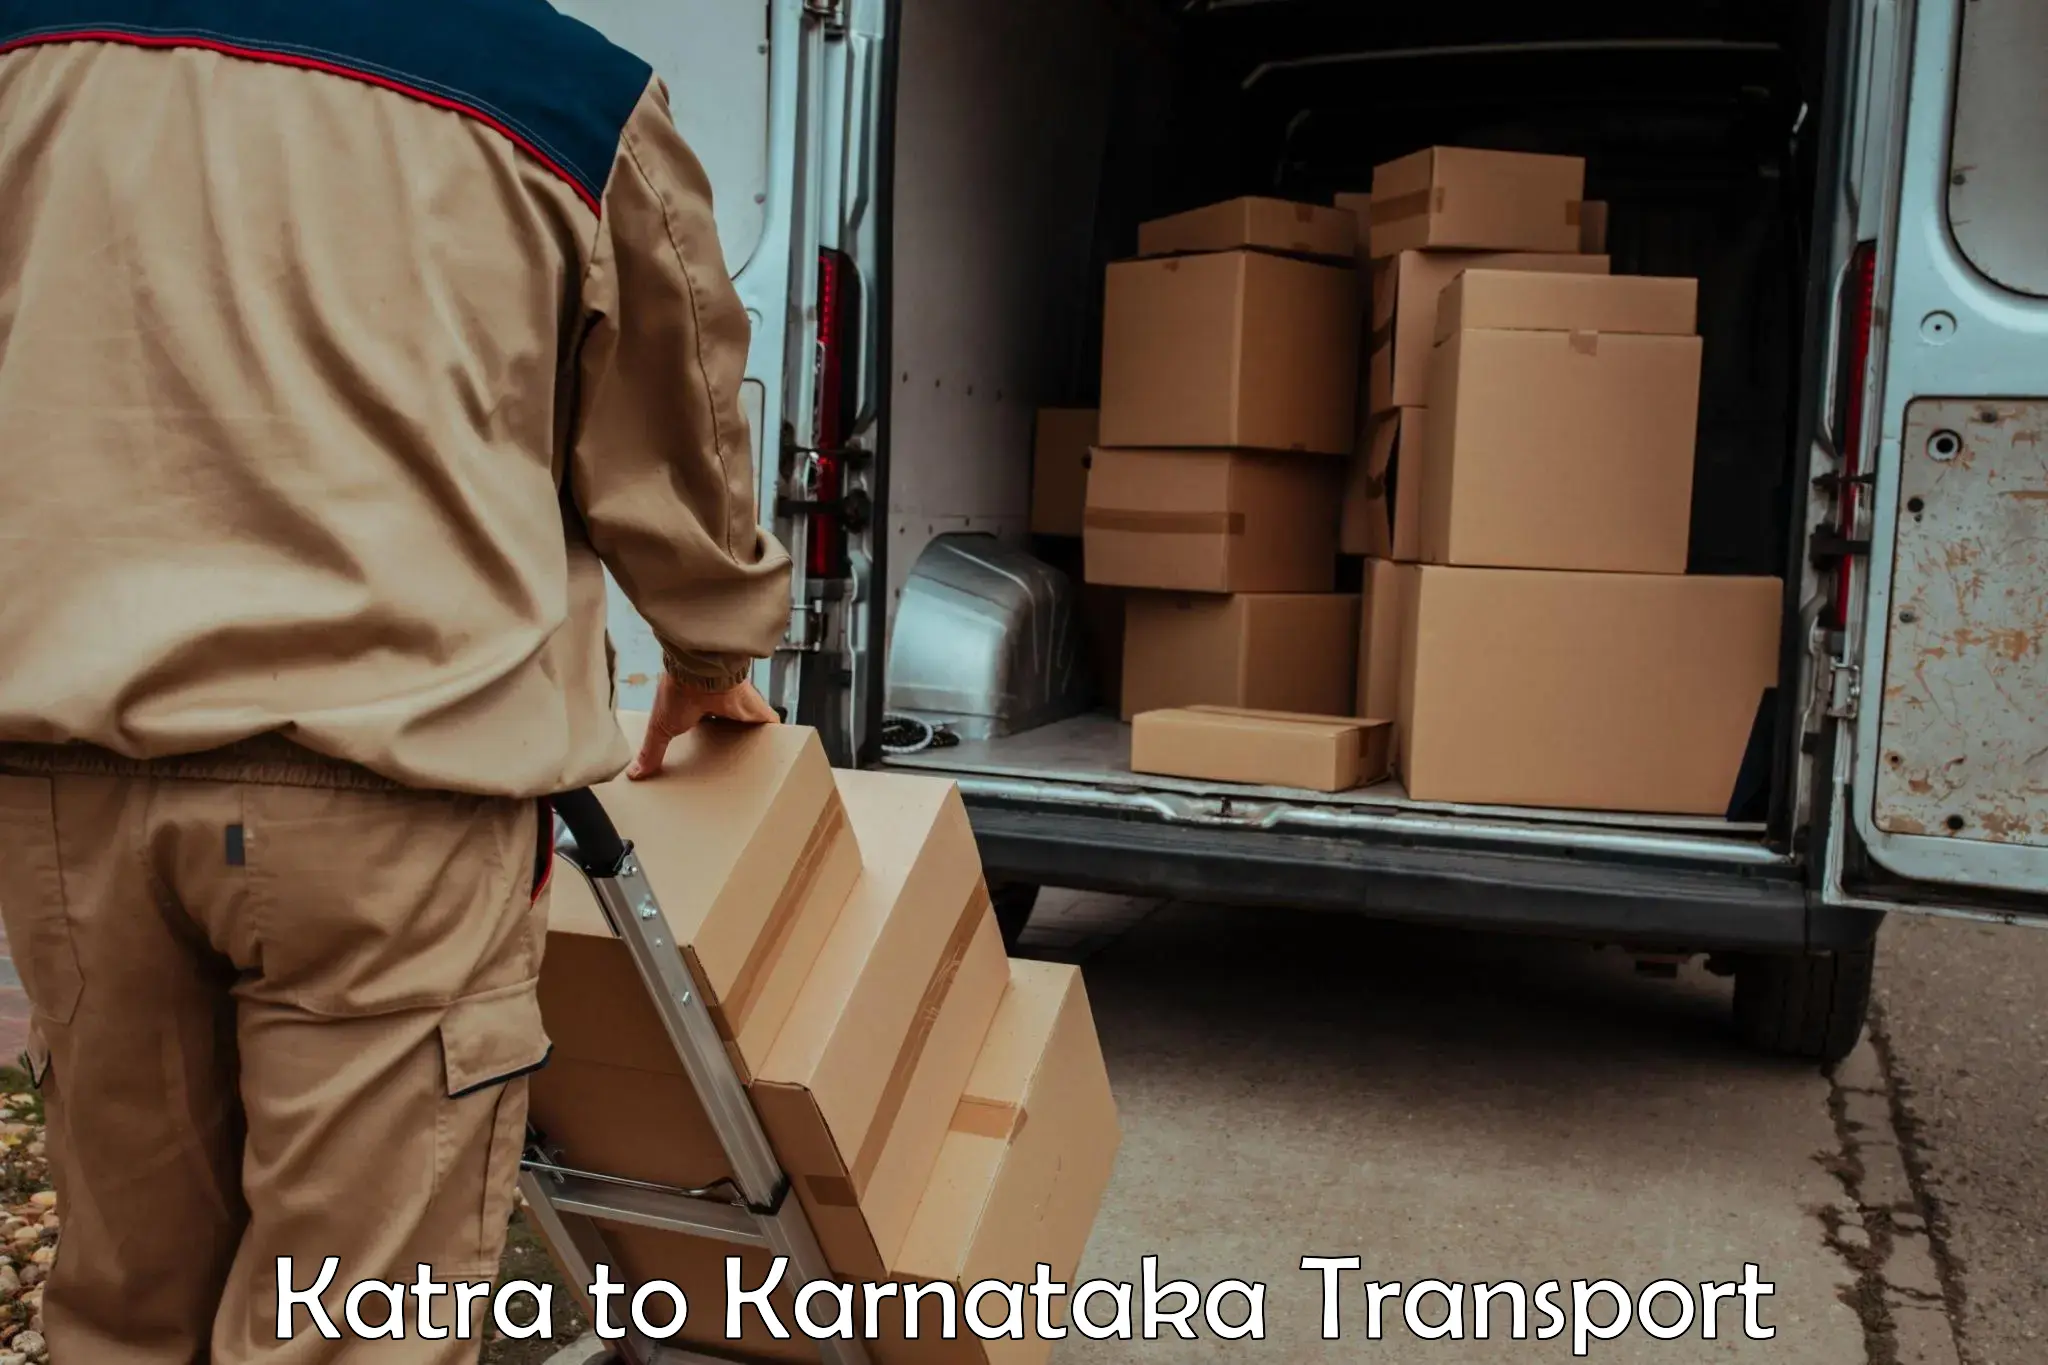 Cycle transportation service Katra to Bethamangala